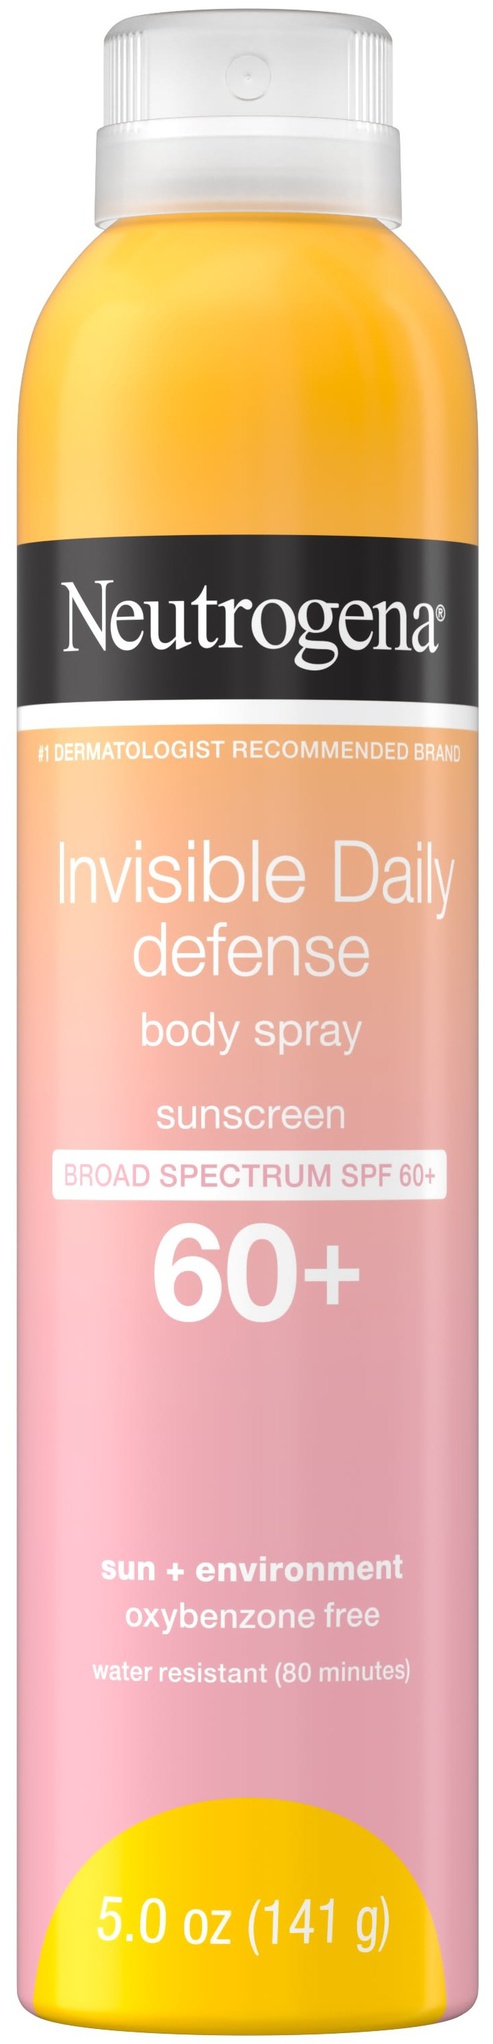 Neutrogena Invisible Daily Defense Spray, SPF 60+